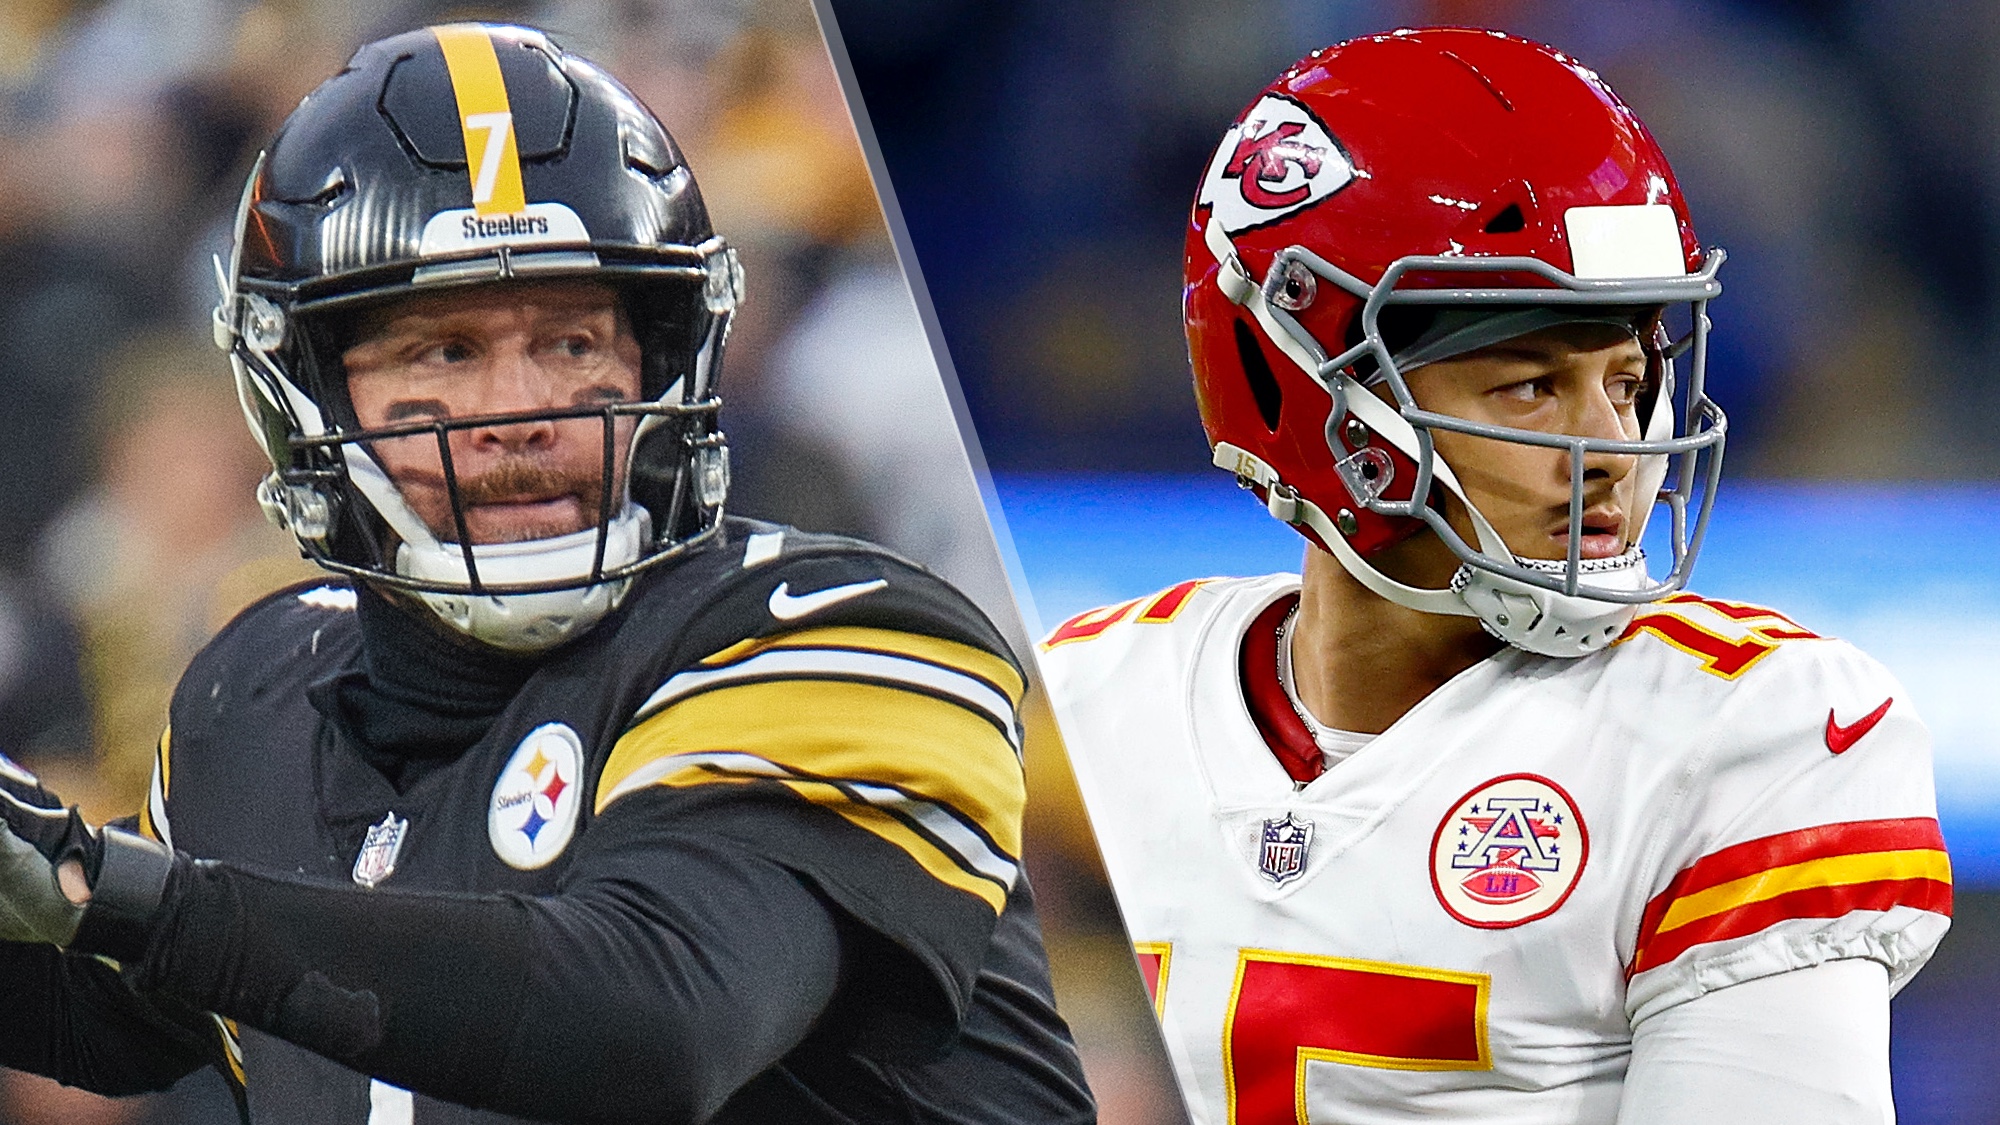 Steelers vs Chiefs live stream: How to watch NFL week 16 online